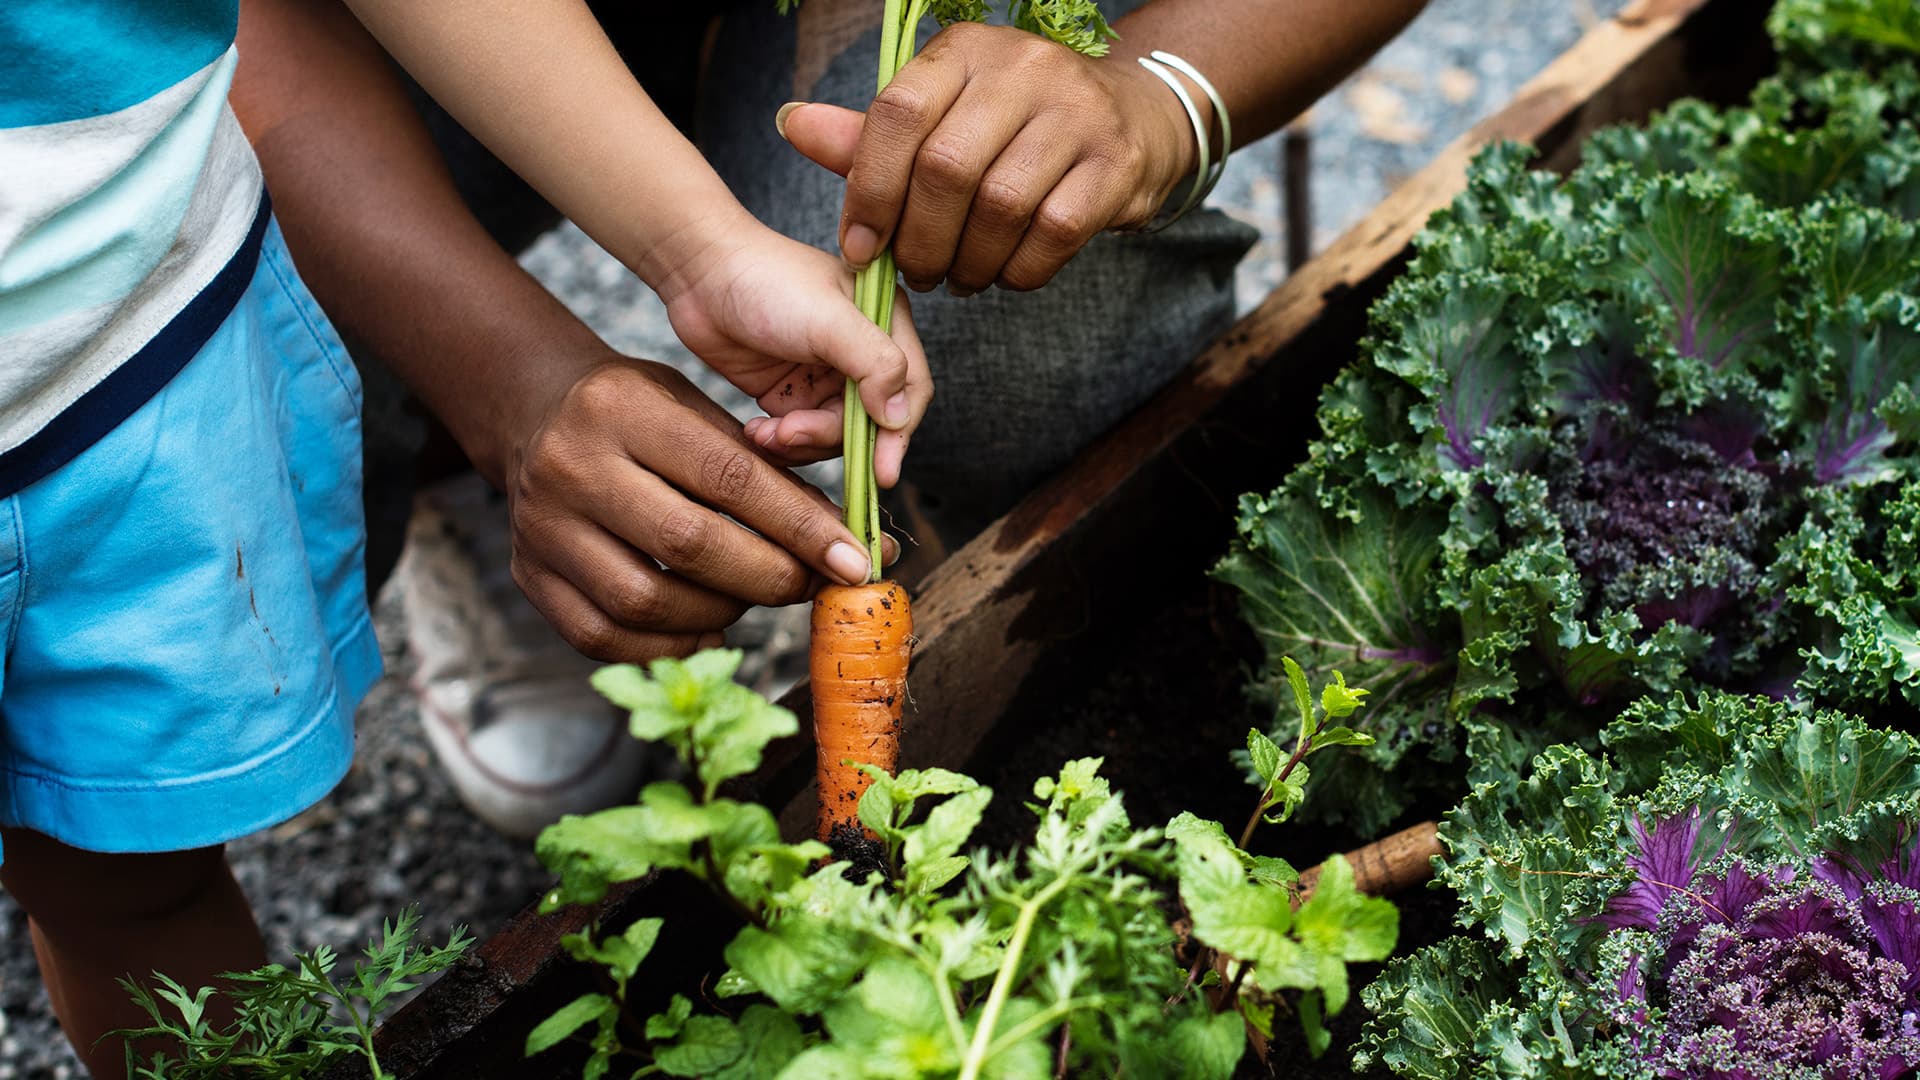 Hands pulling carrot from garden